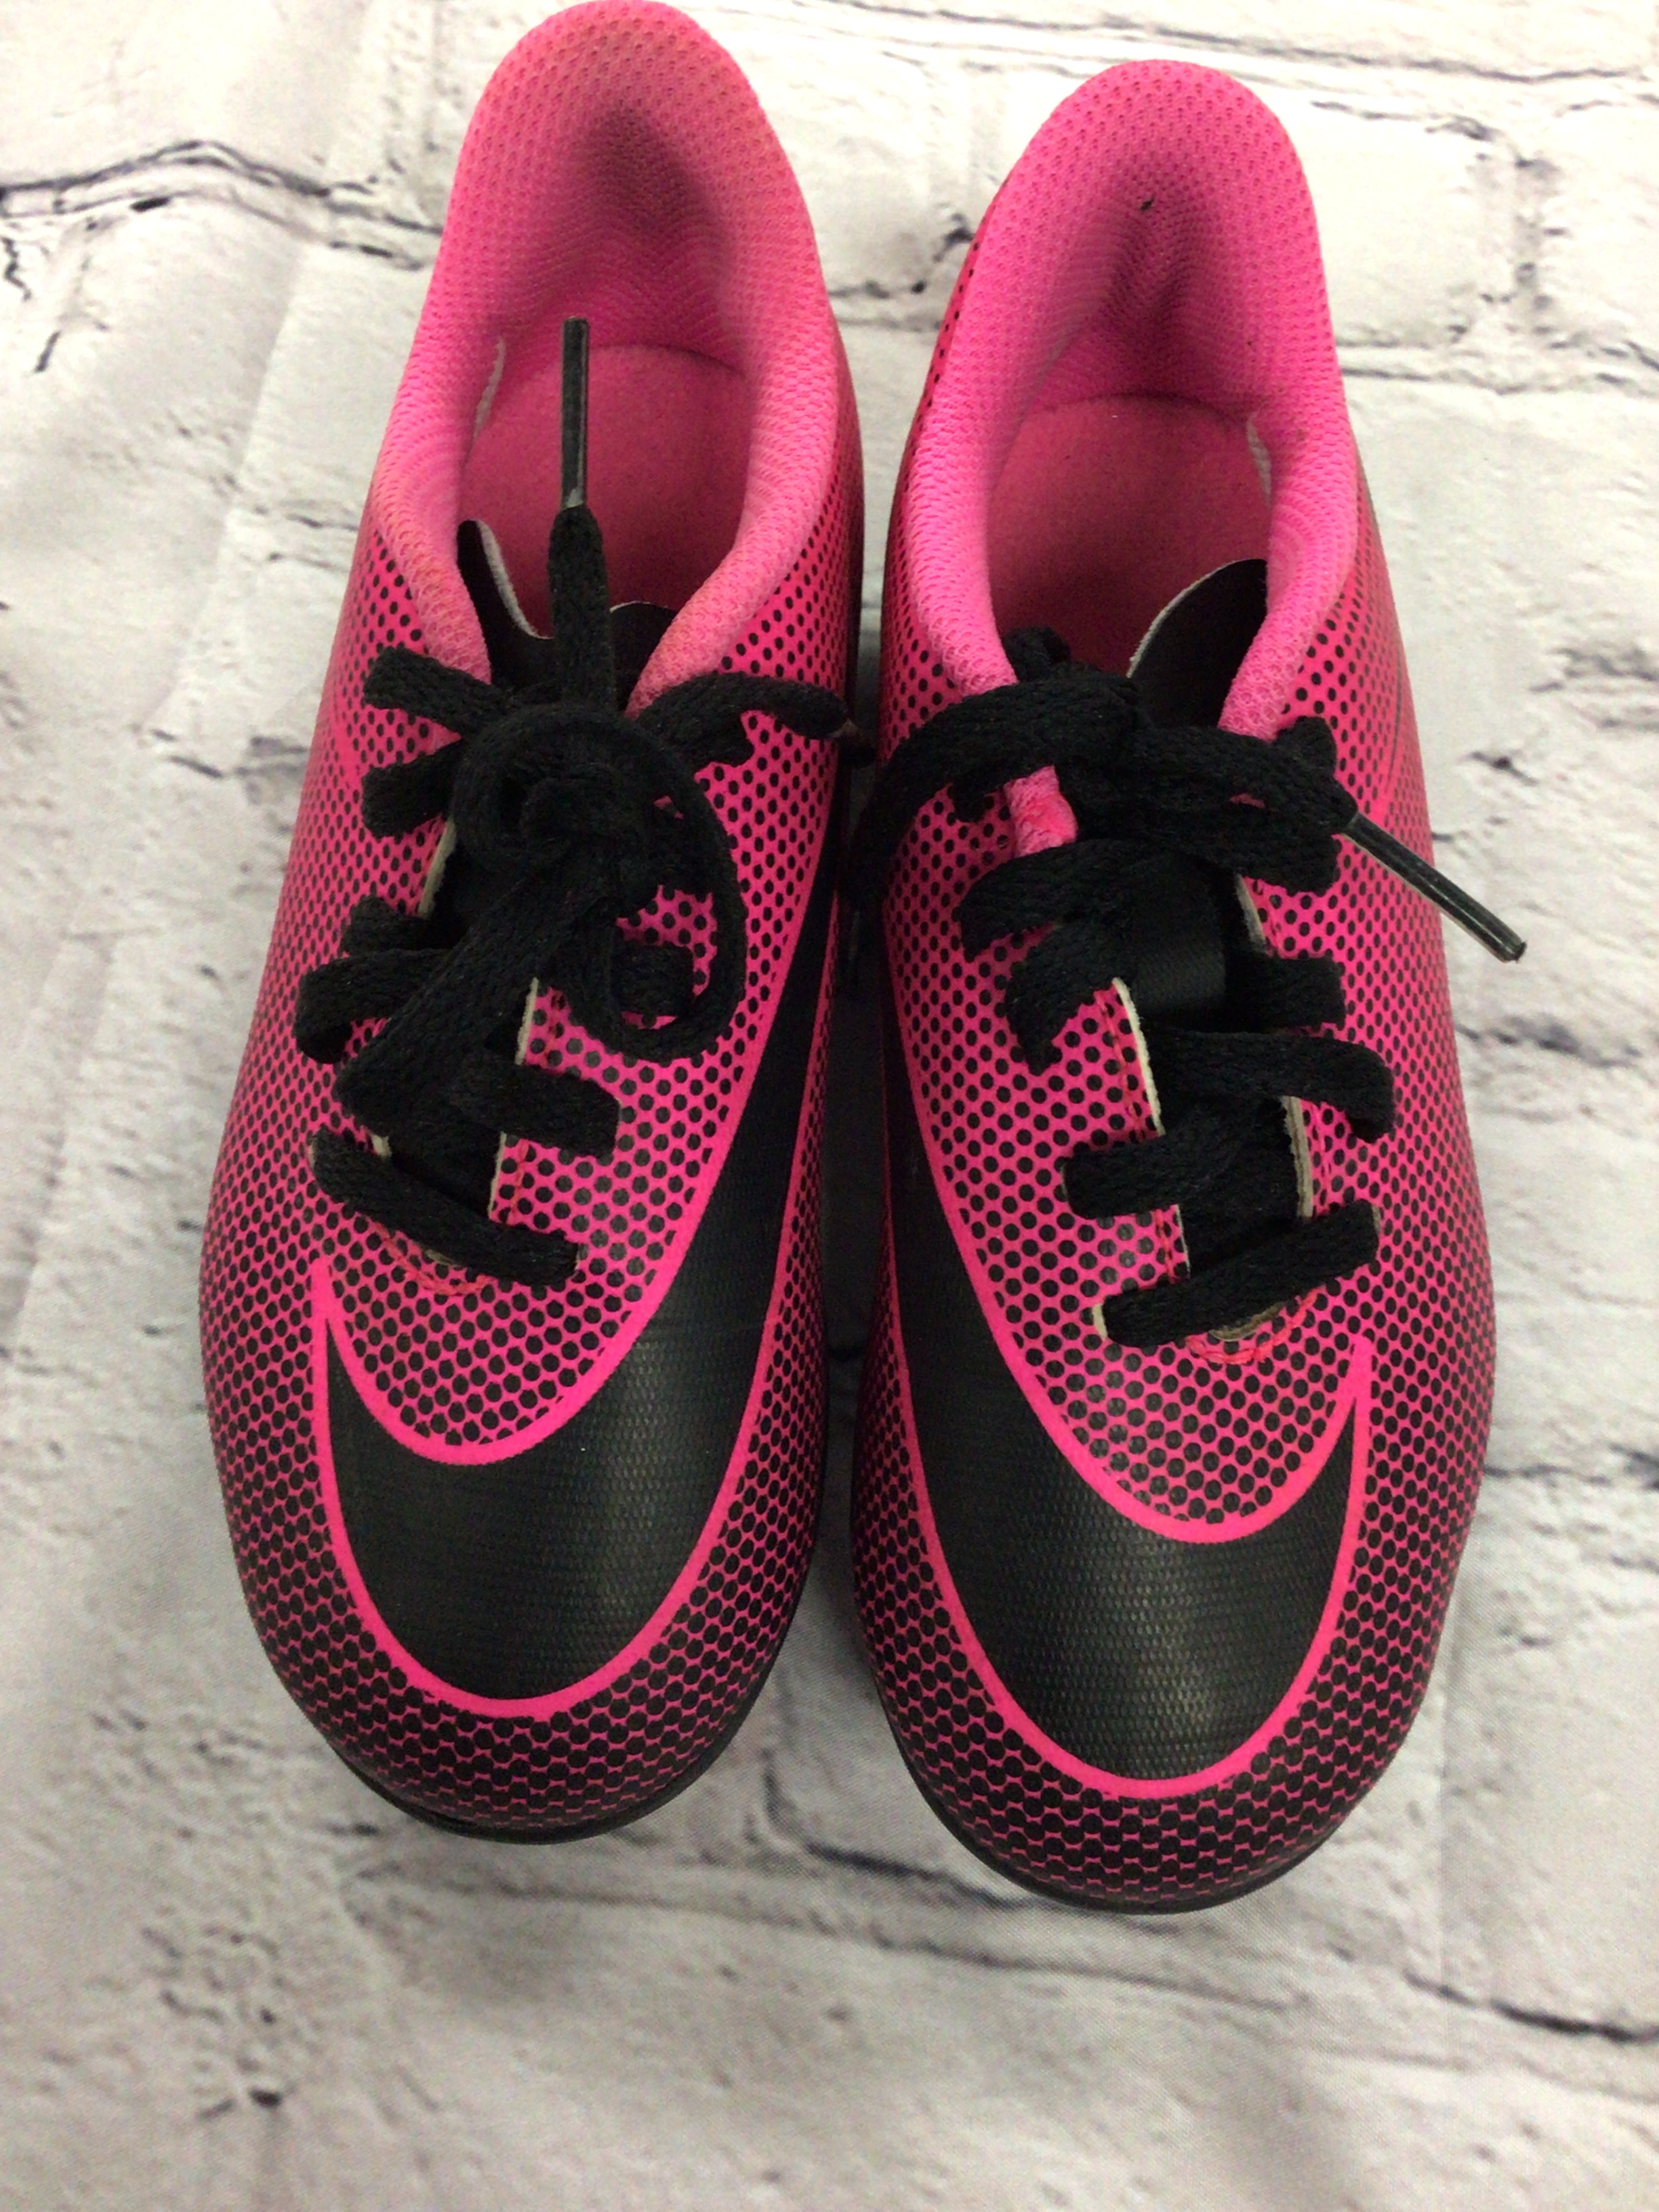 Nike Girls Soccer Cleats Pink Dot sz 11 c